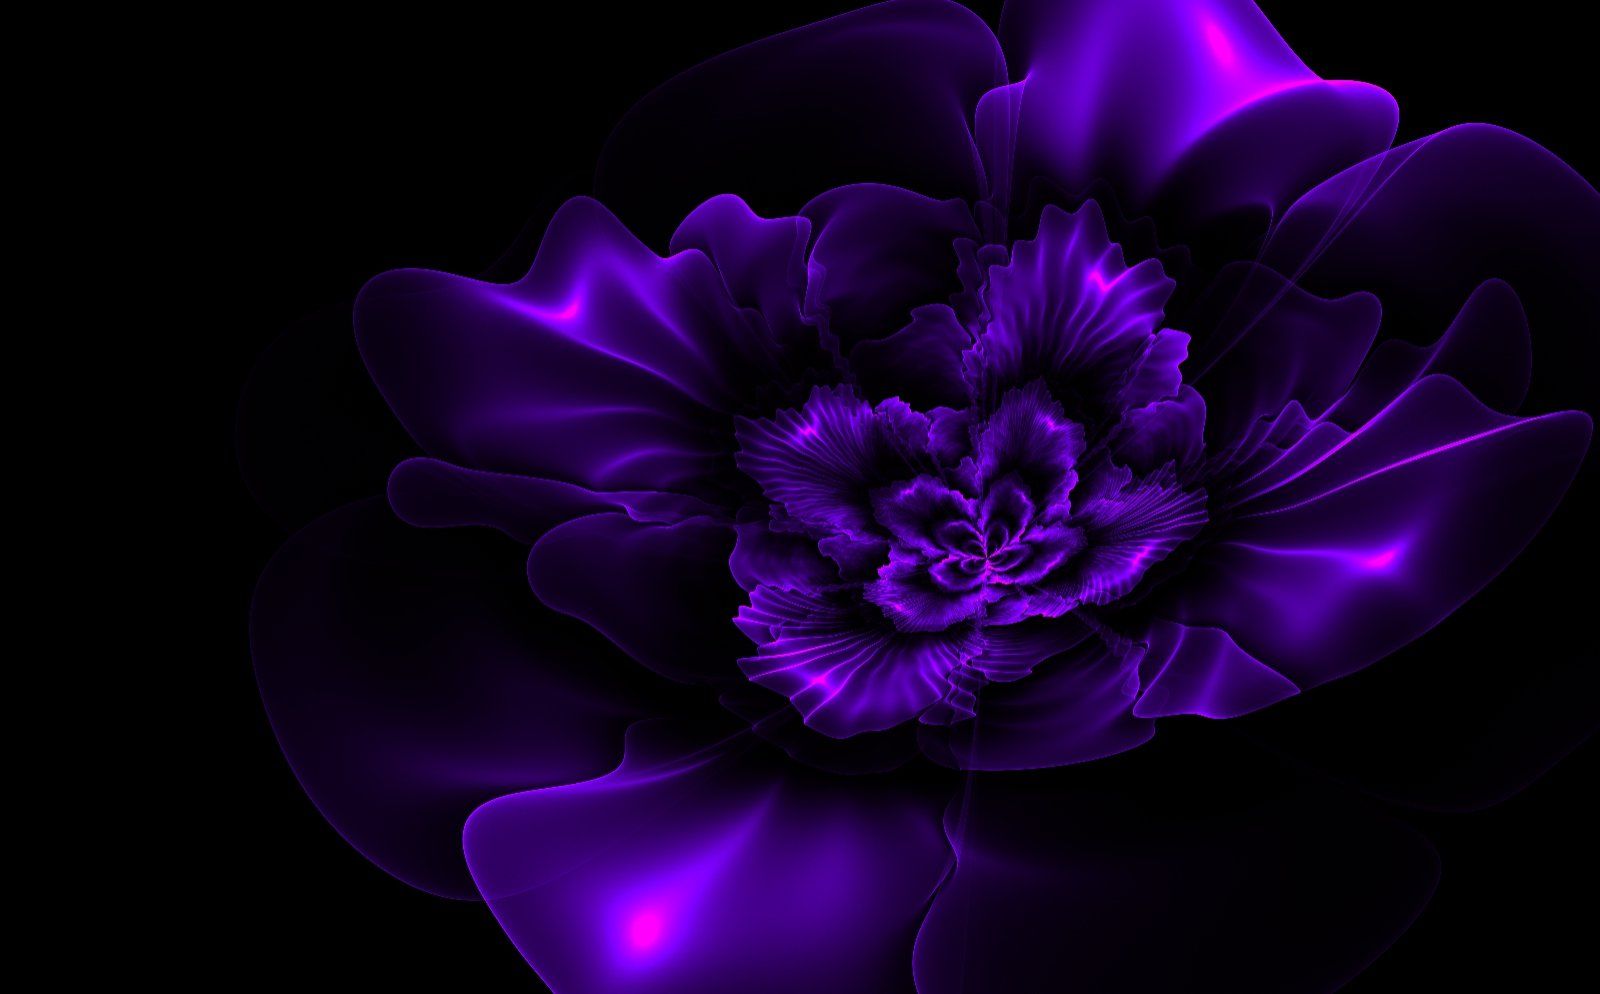 dark purple and black backgrounds